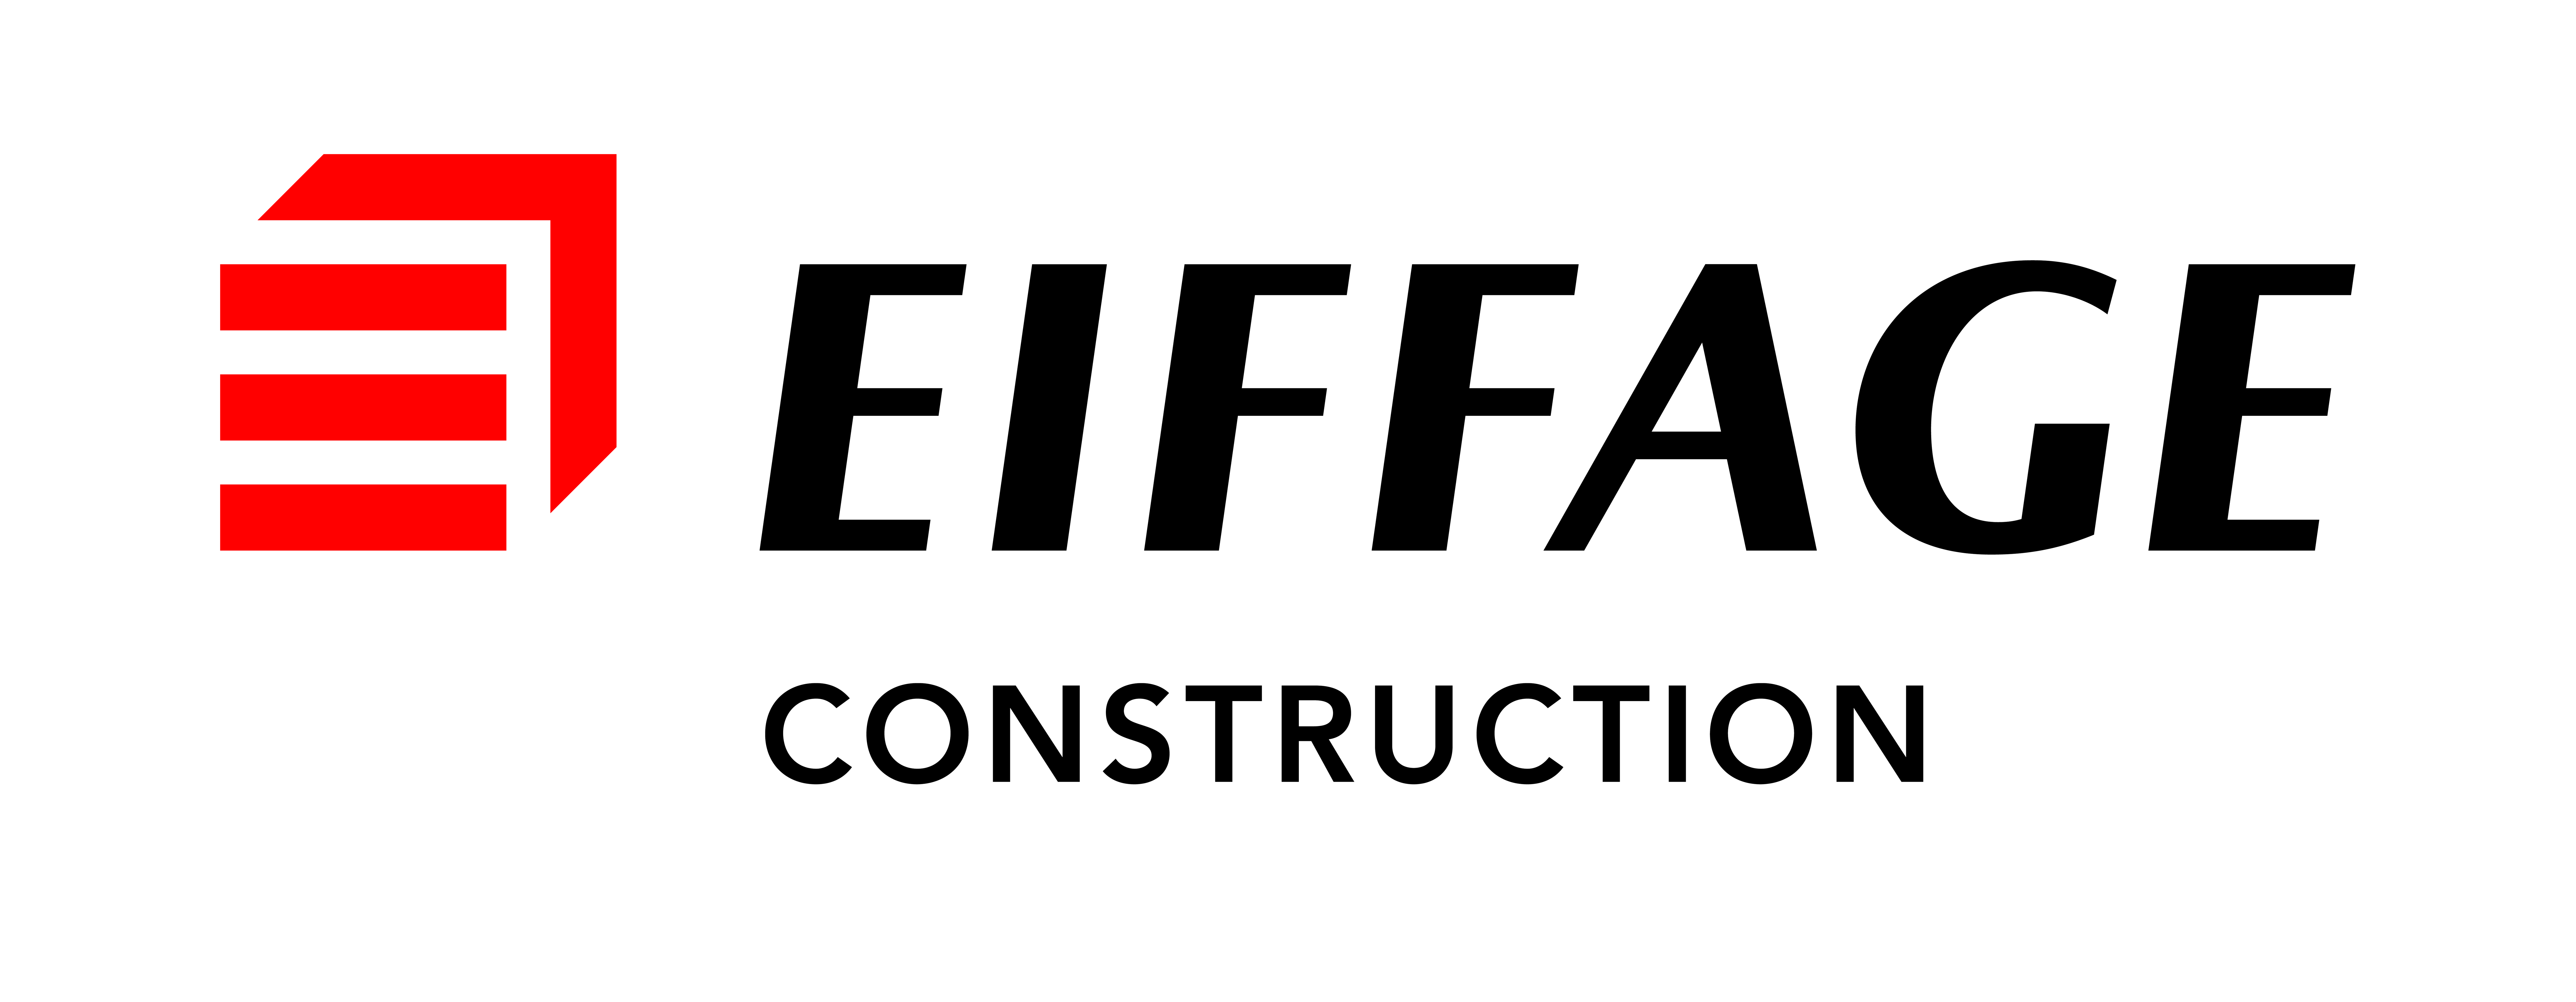 LOGO EIFFAGE CONSTRUCTION